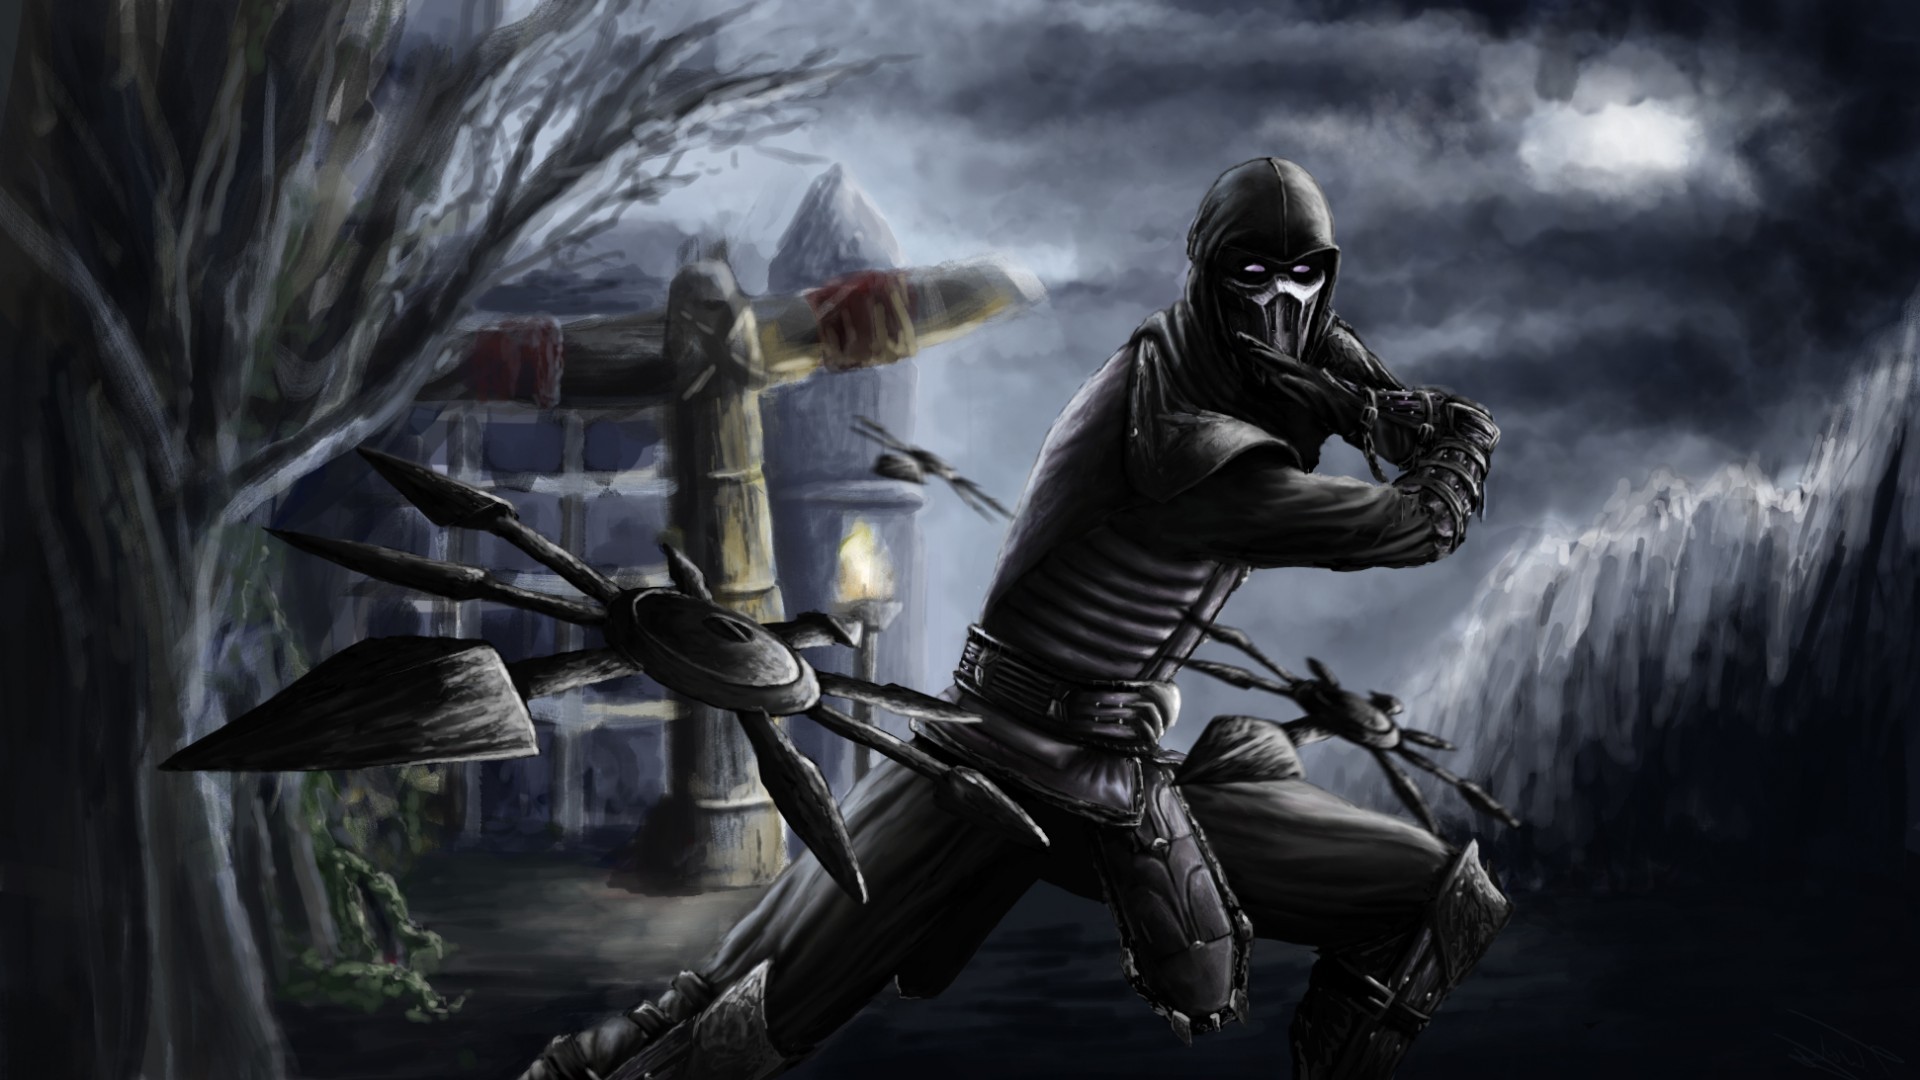 Ninjas Digital Art Noob Saibot Mortal Kombat Wallpapers Hd Desktop And Mobile Backgrounds